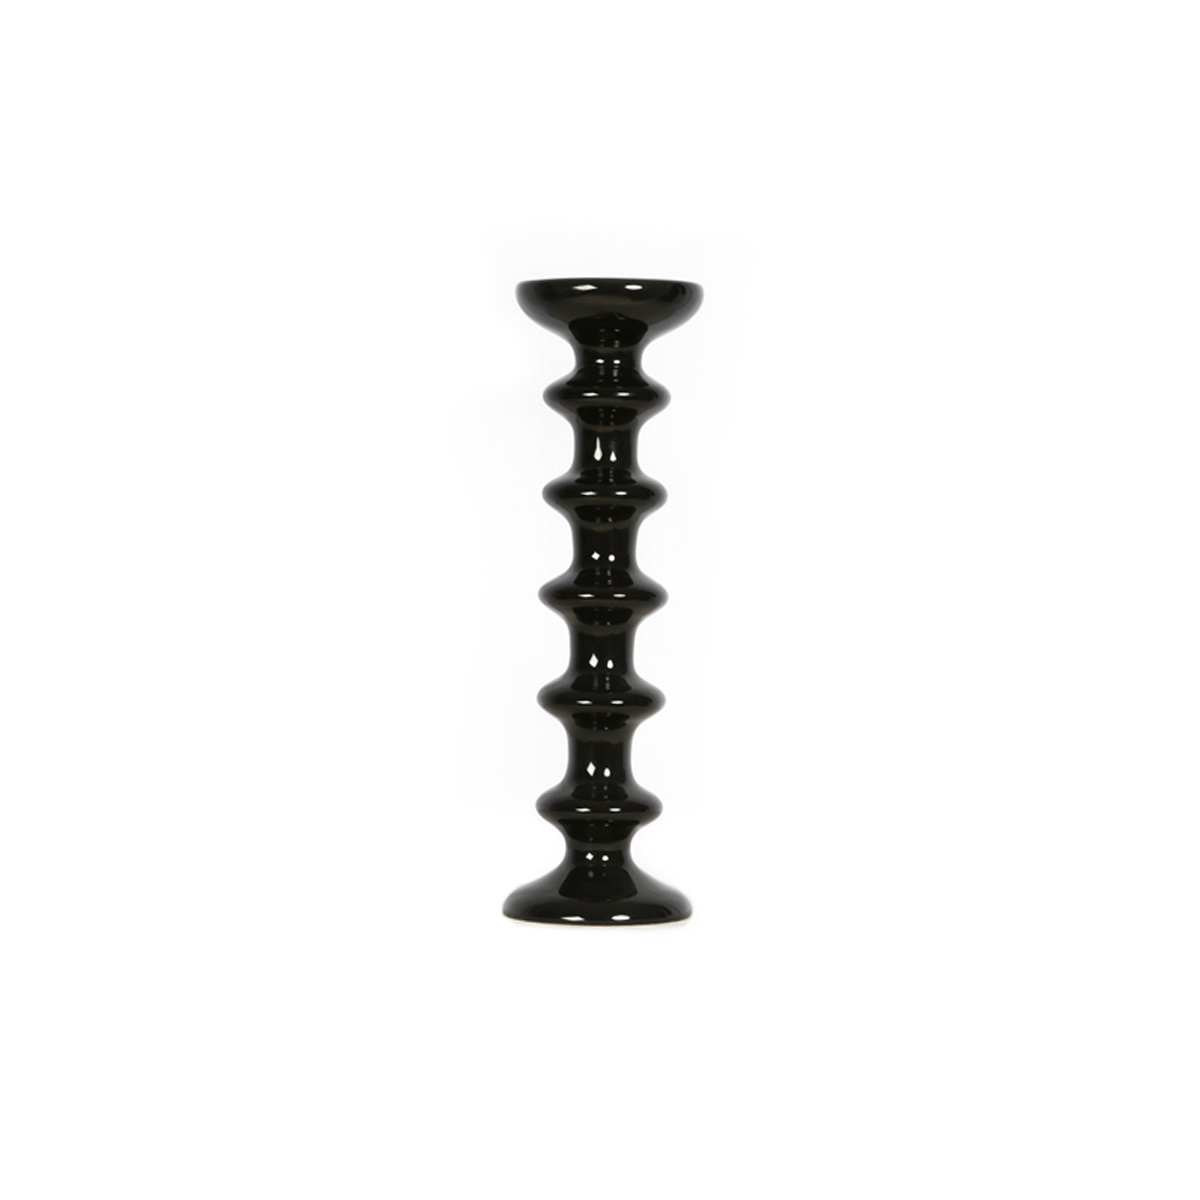 Candlestick Slavic, Black - H30 cm - Ceramic - image 1